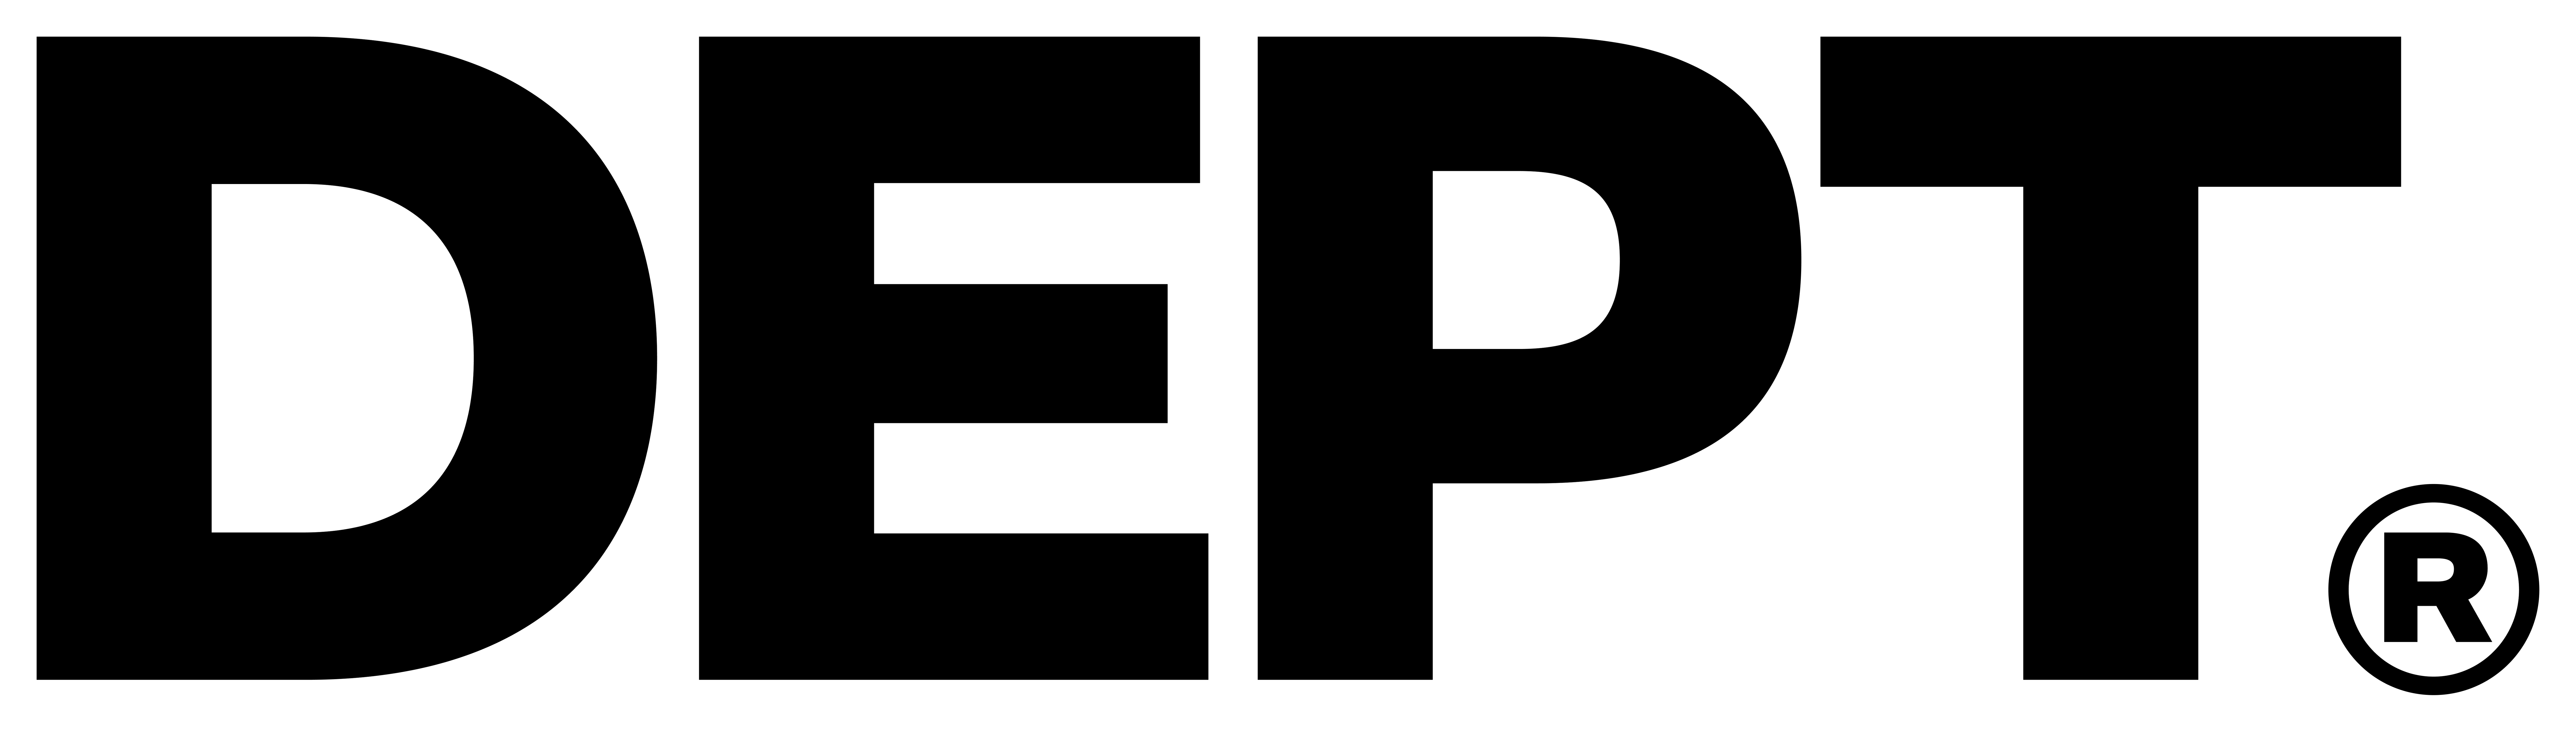 DEPT logo black RGB 